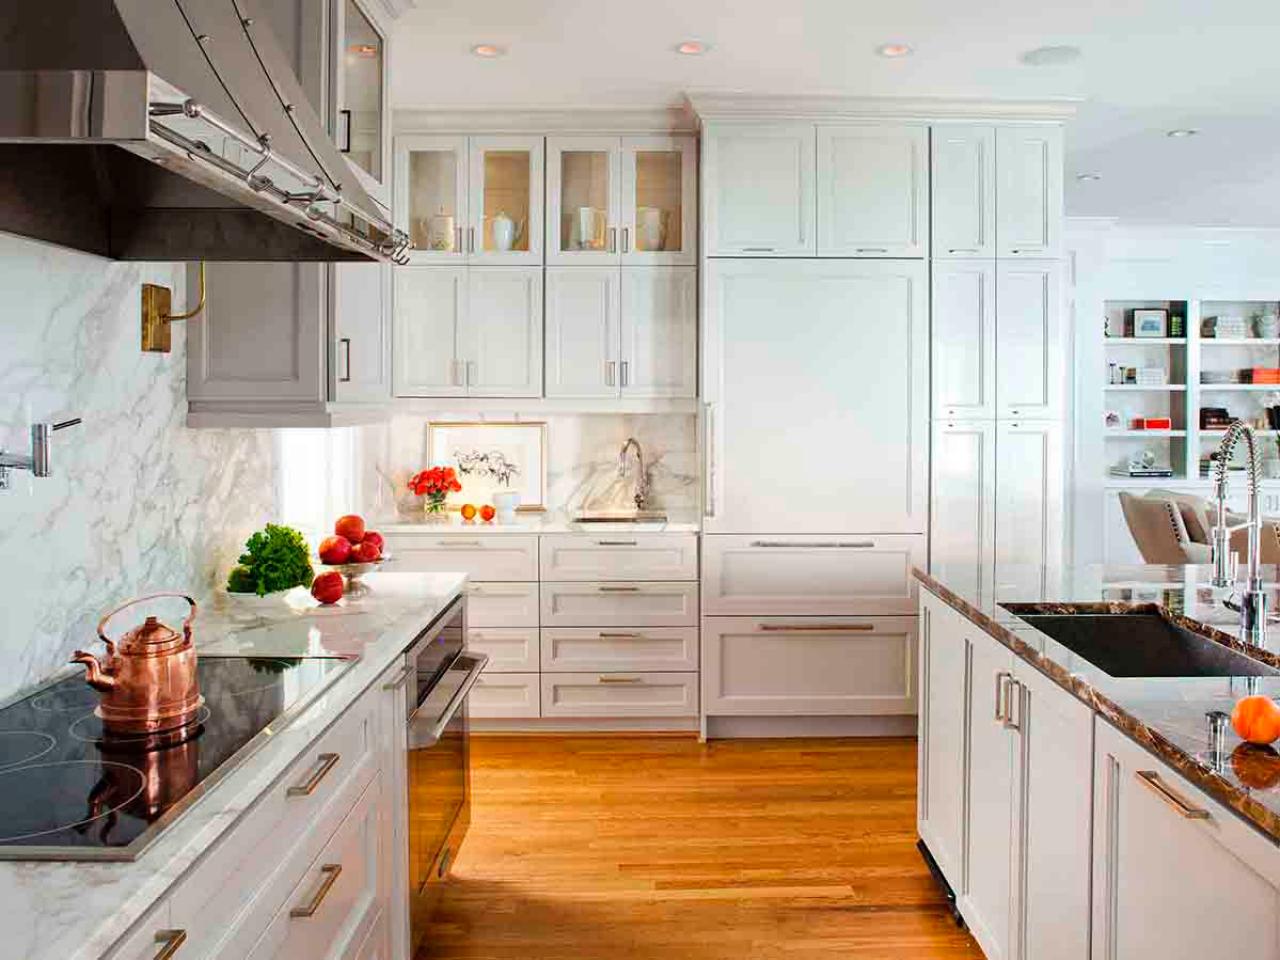 Kitchen Cabinet Design Ideas Pictures, Options, Tips & Ideas   HGTV